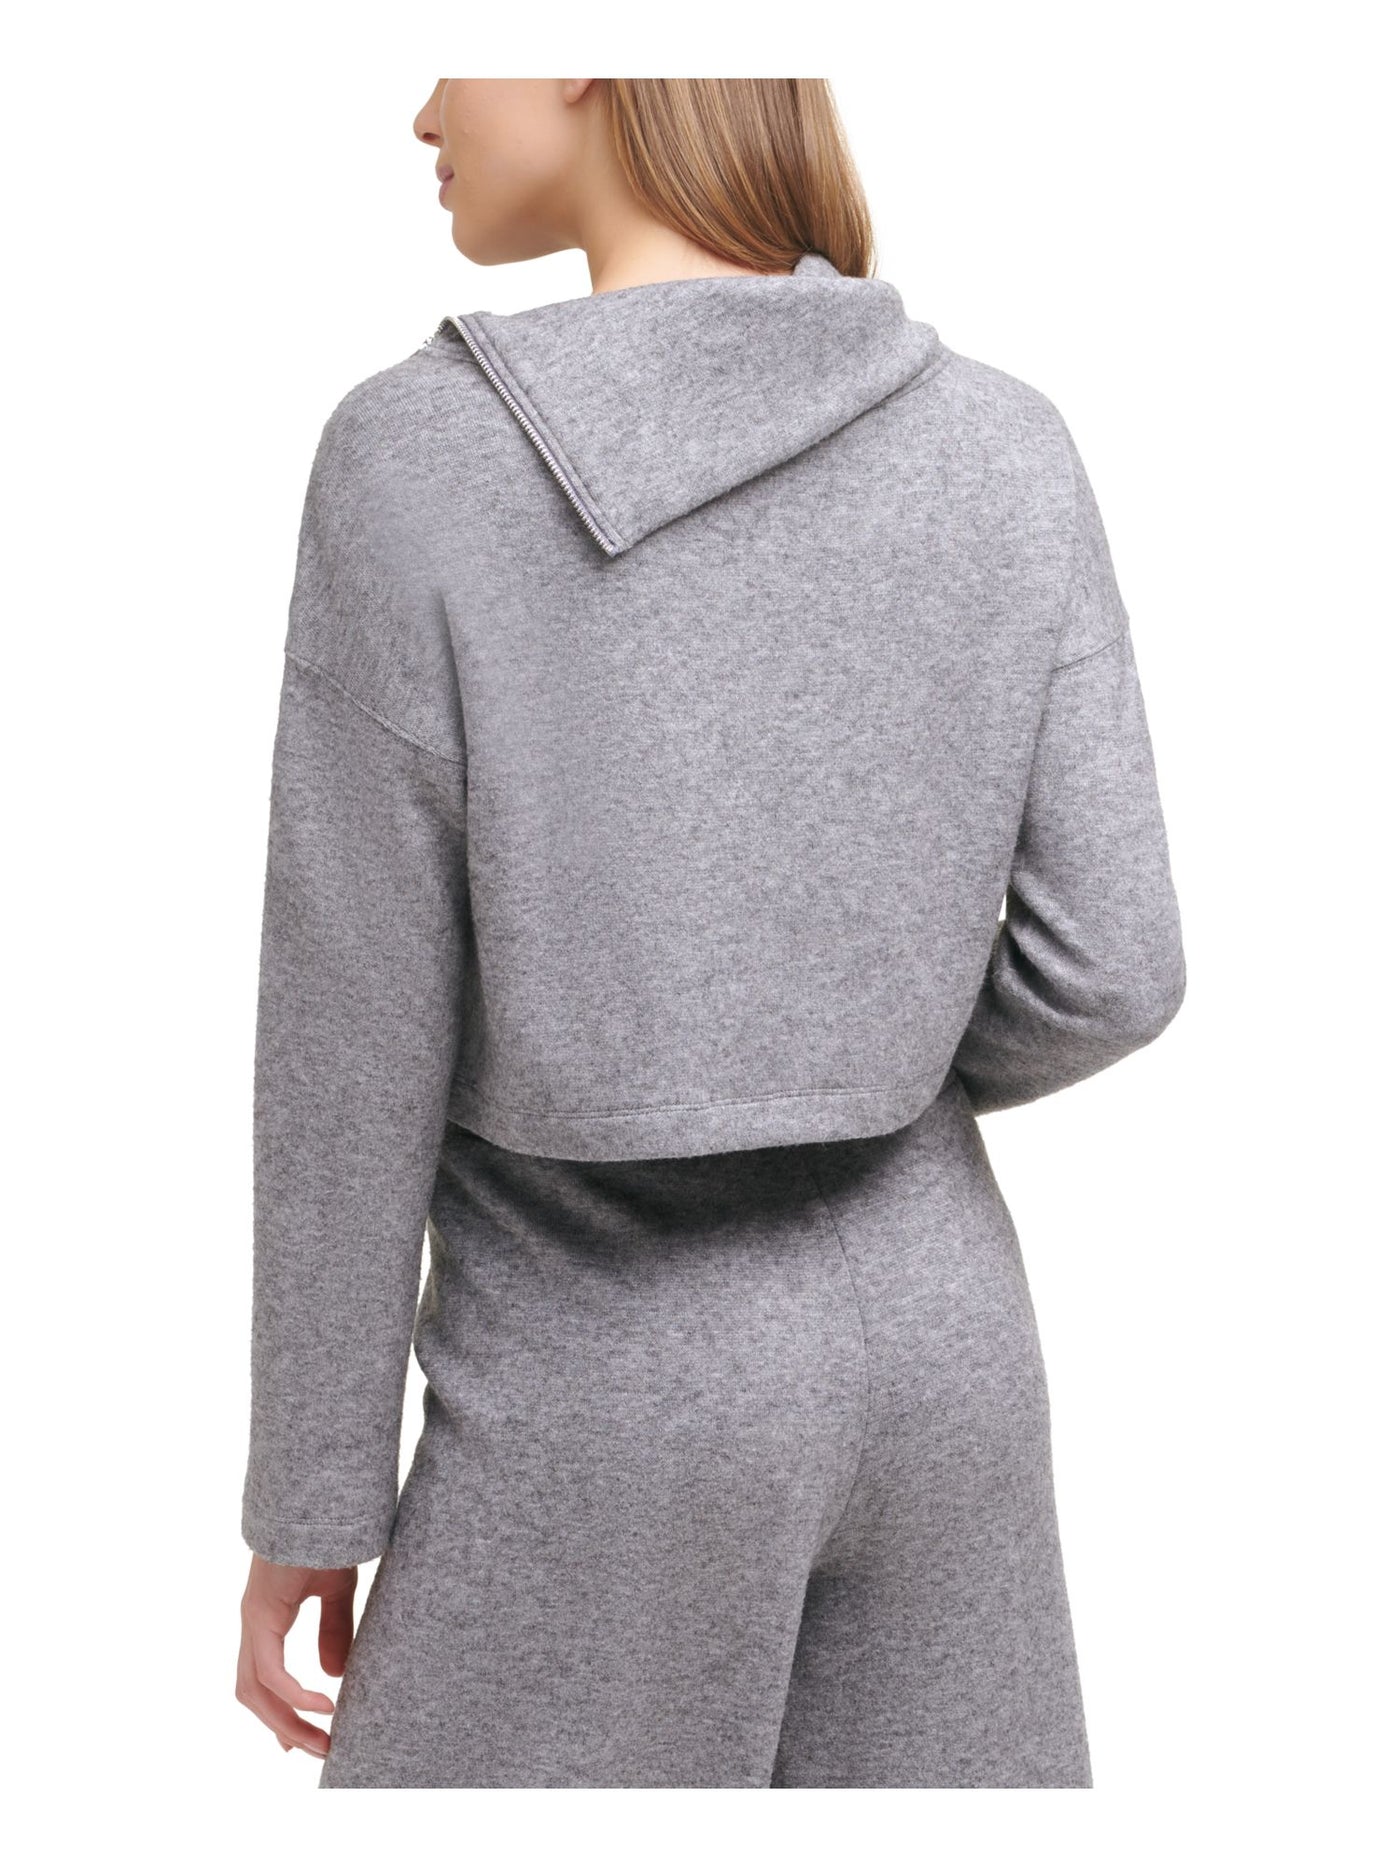 DKNY Womens Gray Heather Long Sleeve Top XL